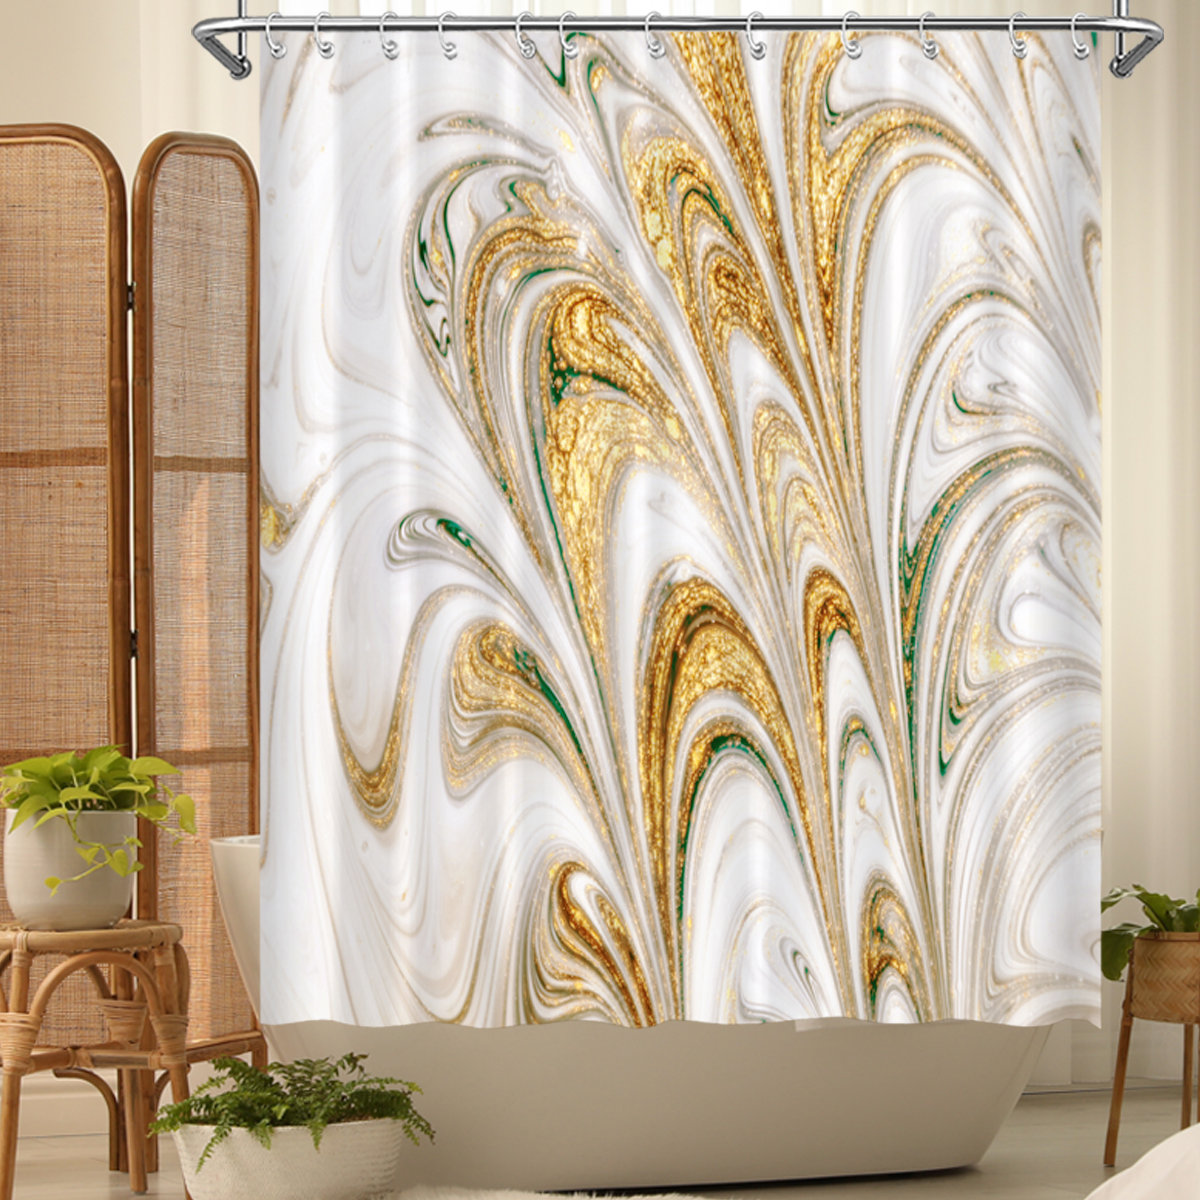 Gold Fish Beauty Bathroom Set Shower Curtain Polyester Fabric Decor Bath Mat Rug 